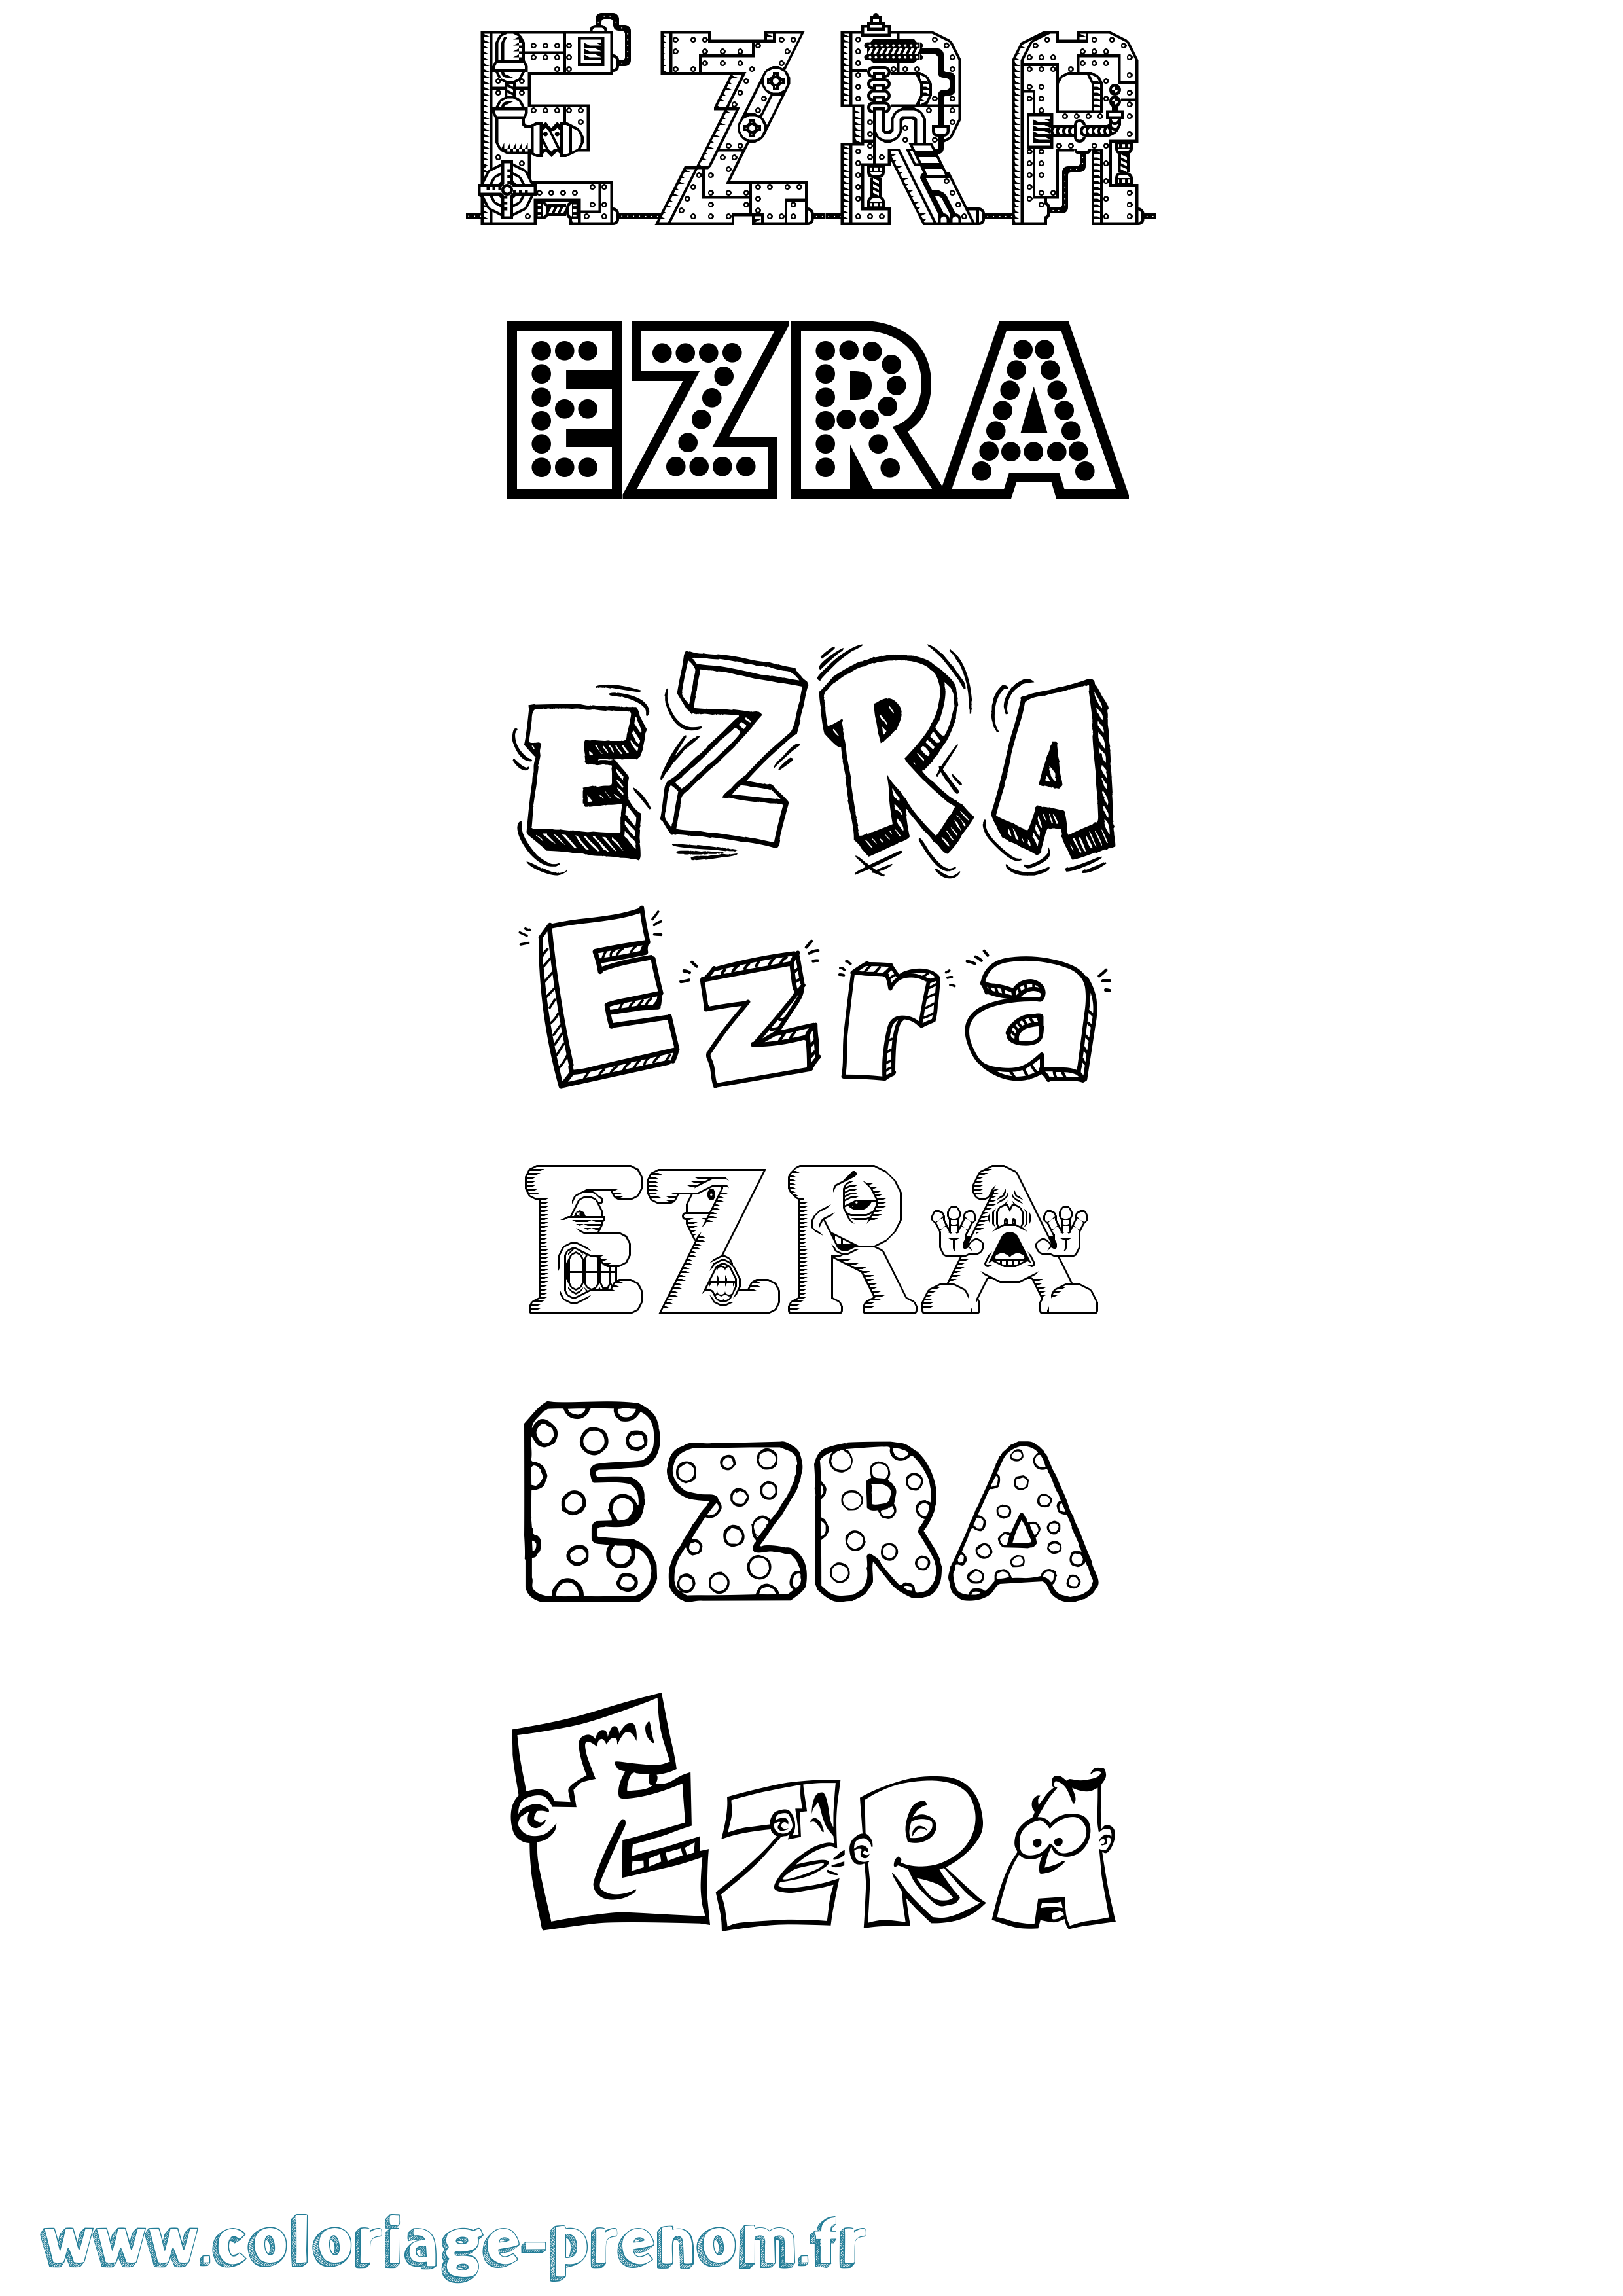 Coloriage prénom Ezra Fun